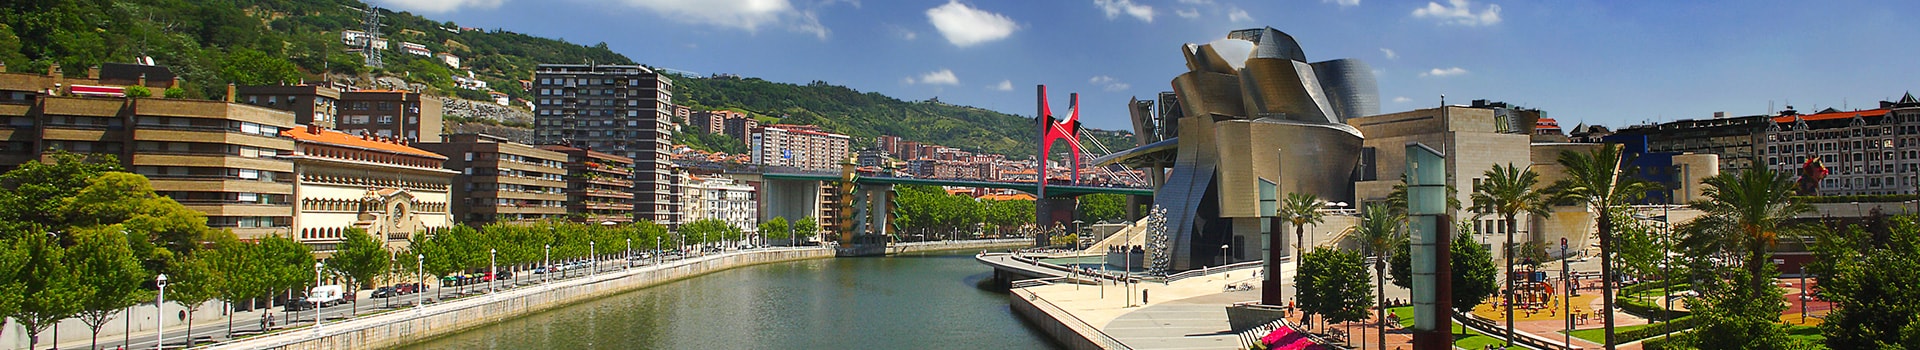 Lanzarote - Bilbao